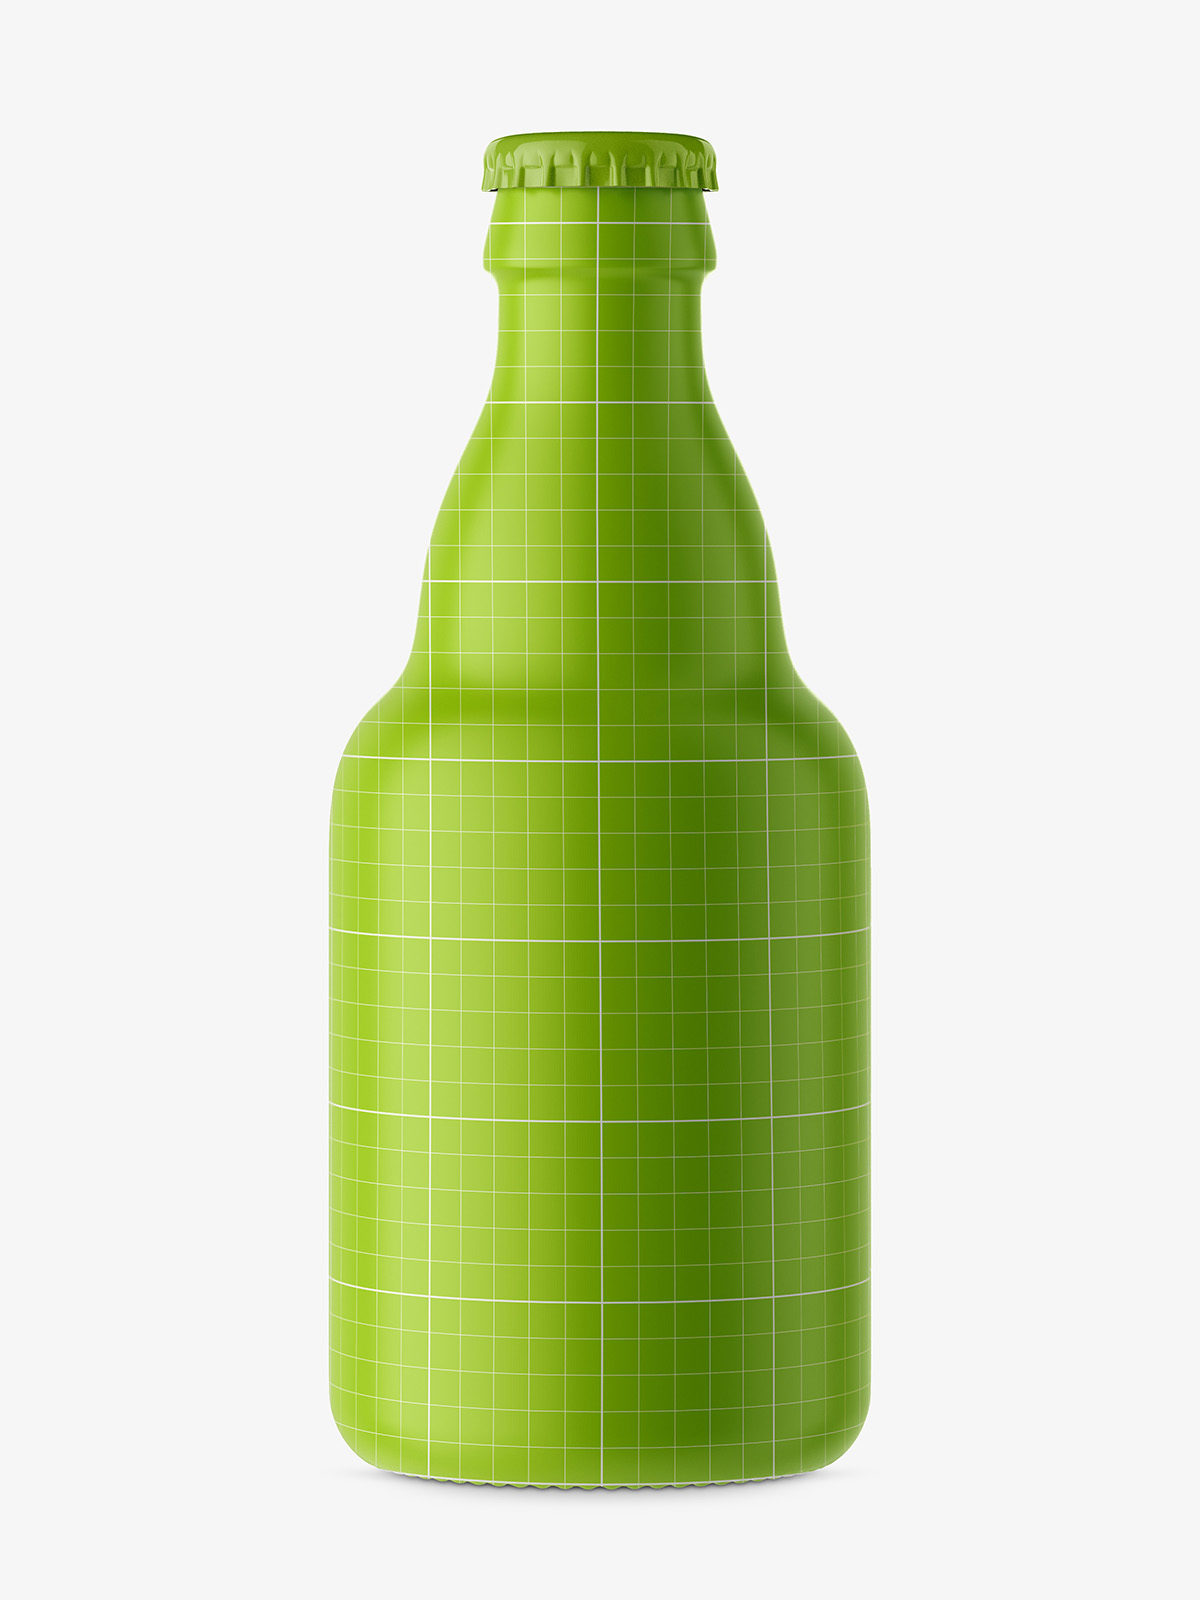 Download Small beer bottle mockup / brown - Smarty Mockups